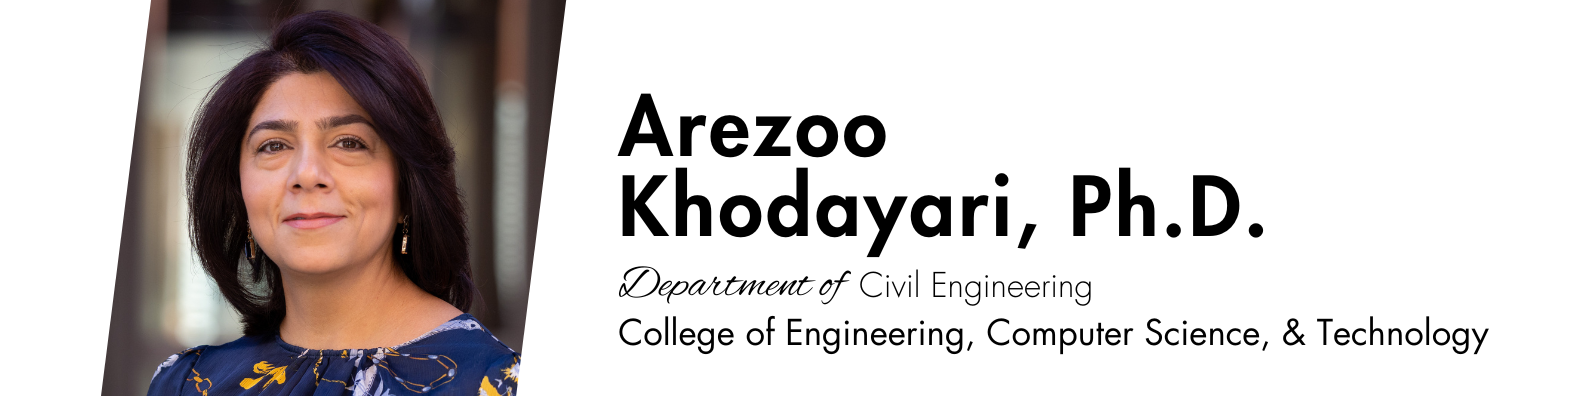 Arezoo Khodayari banner